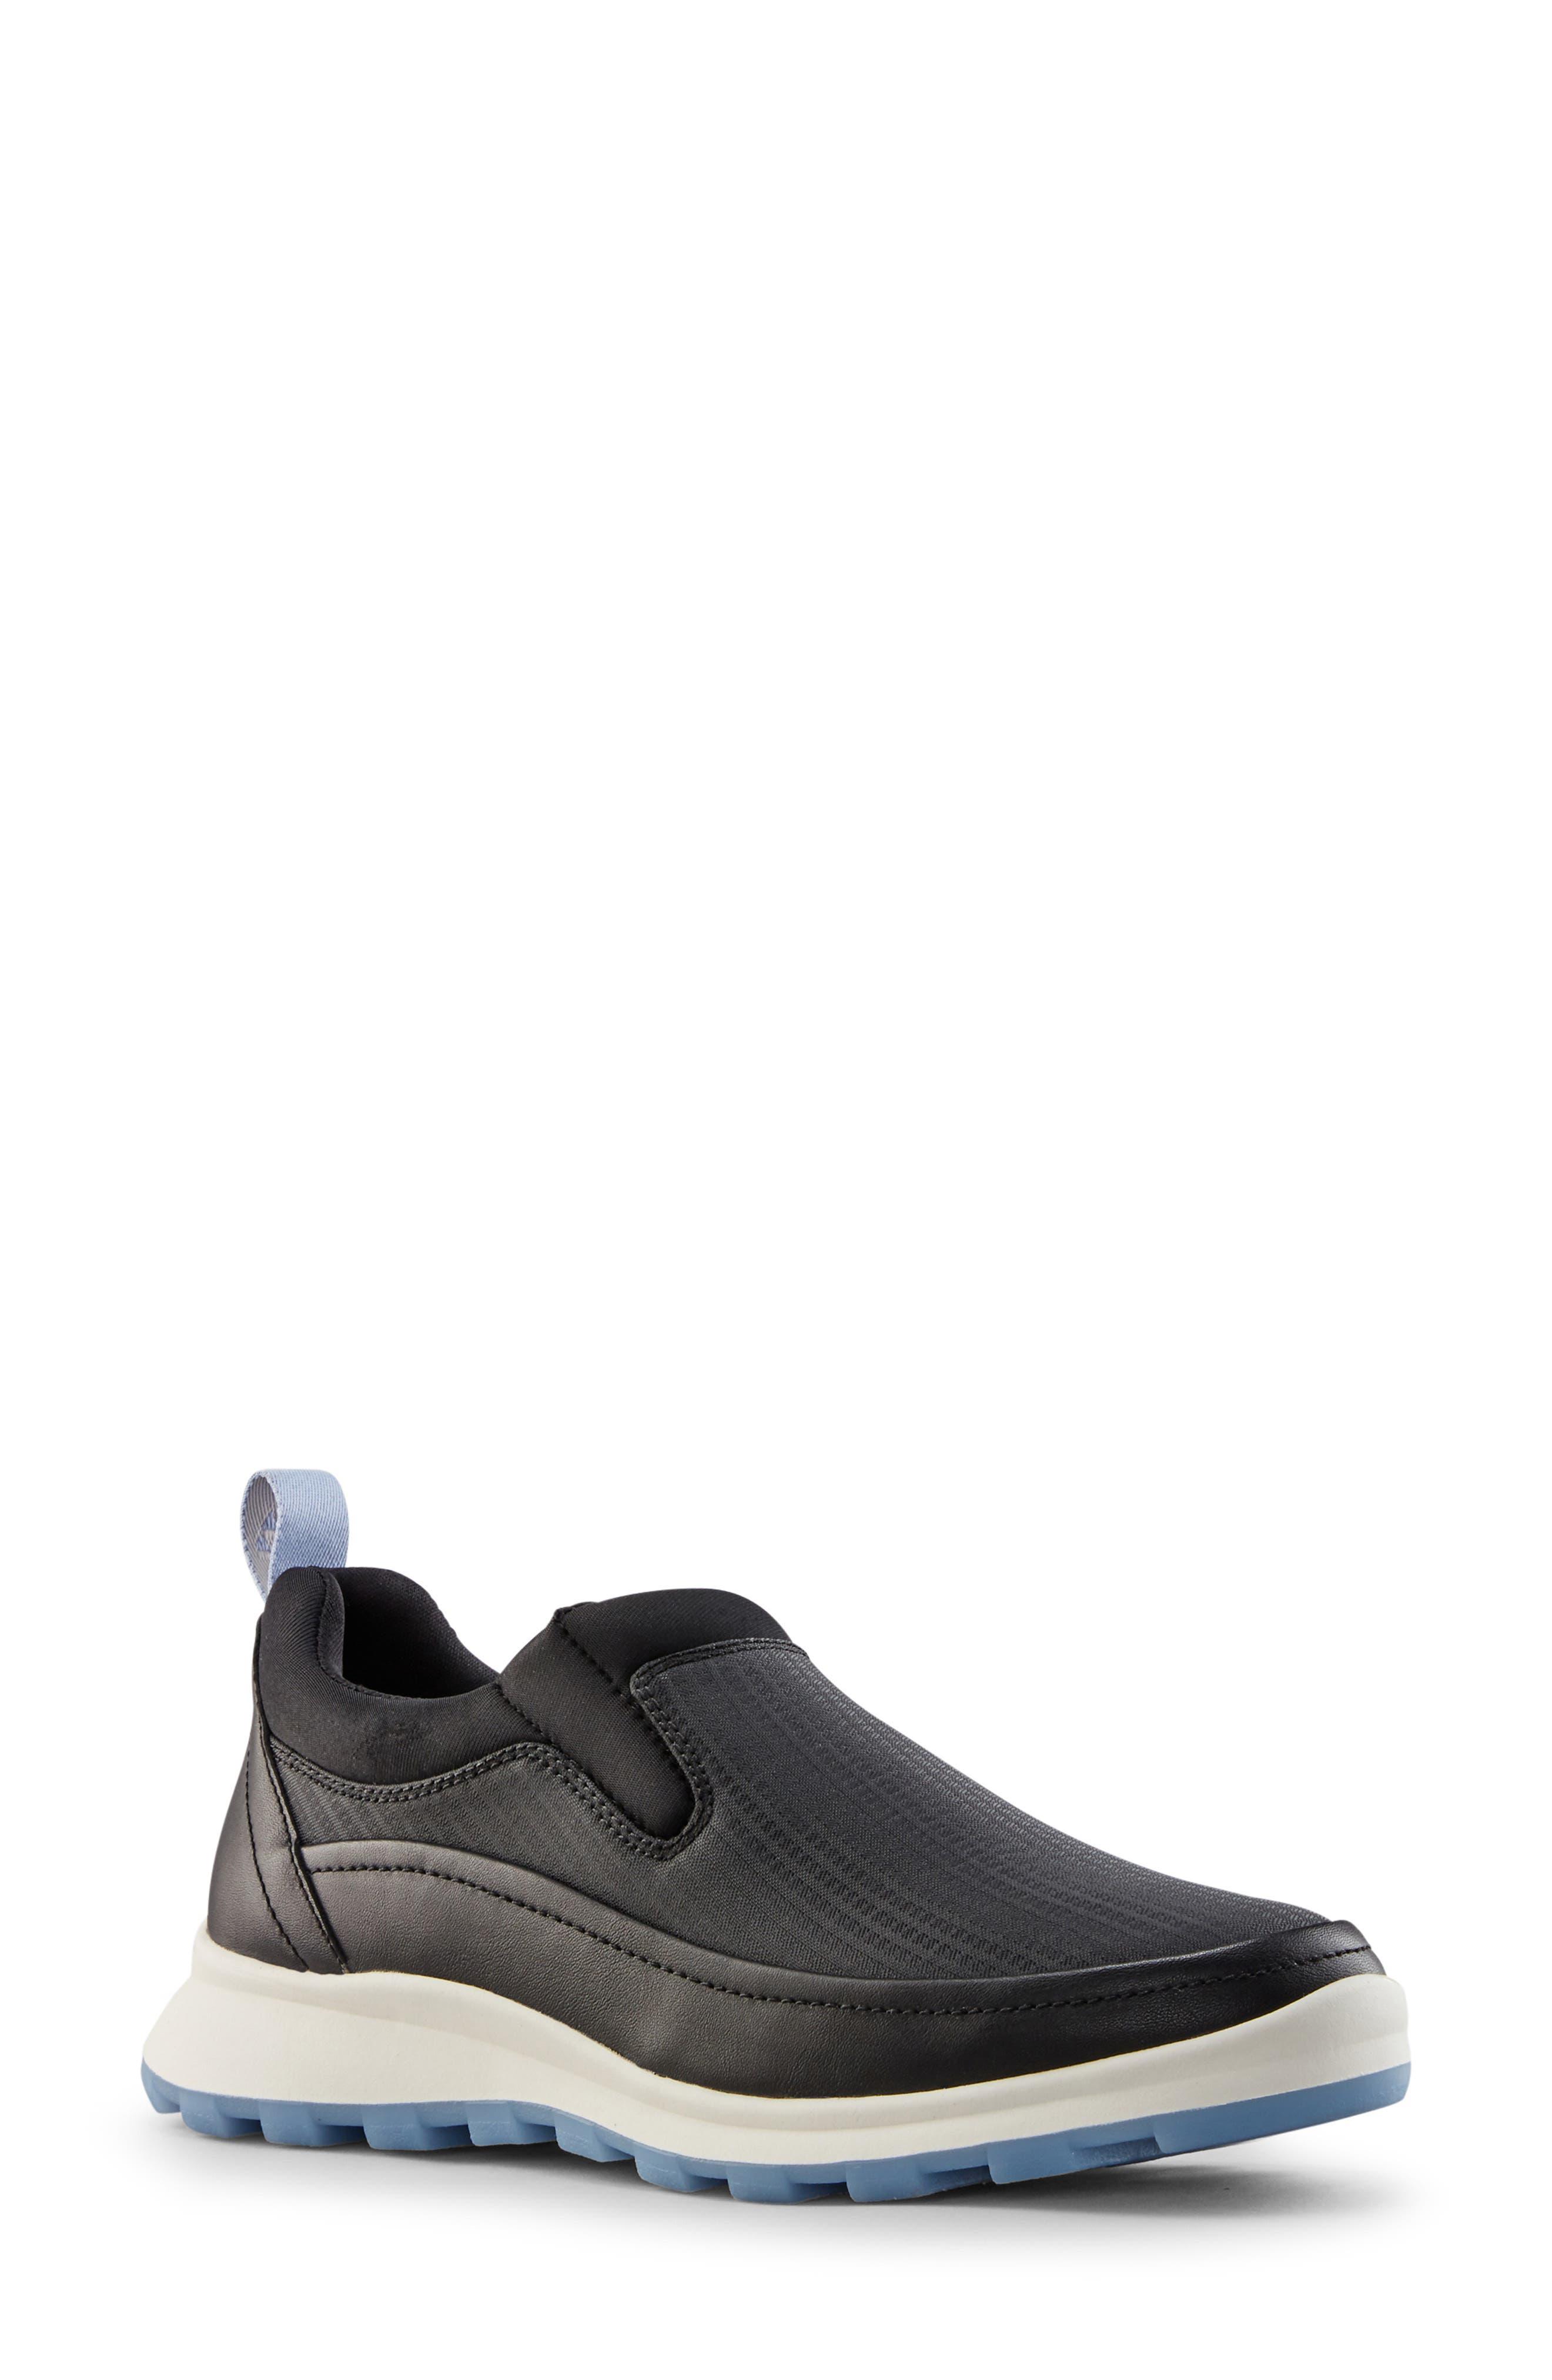 Cougar Shoes Rave Waterproof Slip-on Sneaker In Black/white At Nordstrom  Rack | Lyst